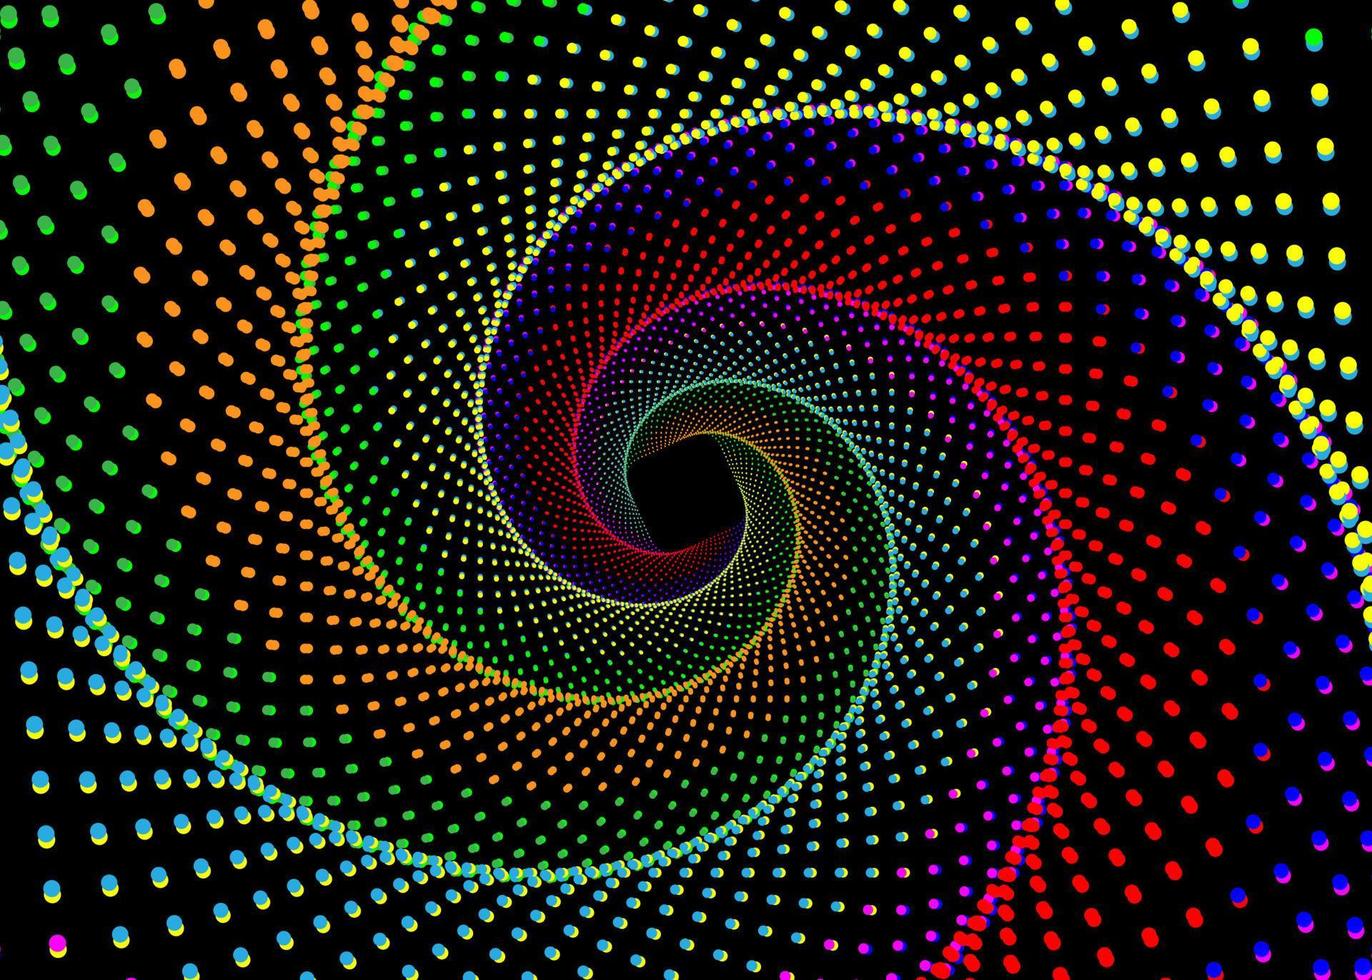 zwart, rood, roze, blauw, cyaan, oranje, groente, en geel stippel spiraal draaikolk plein vector sjabloon. kleurrijk golvend kolken patroon dots achtergrond.